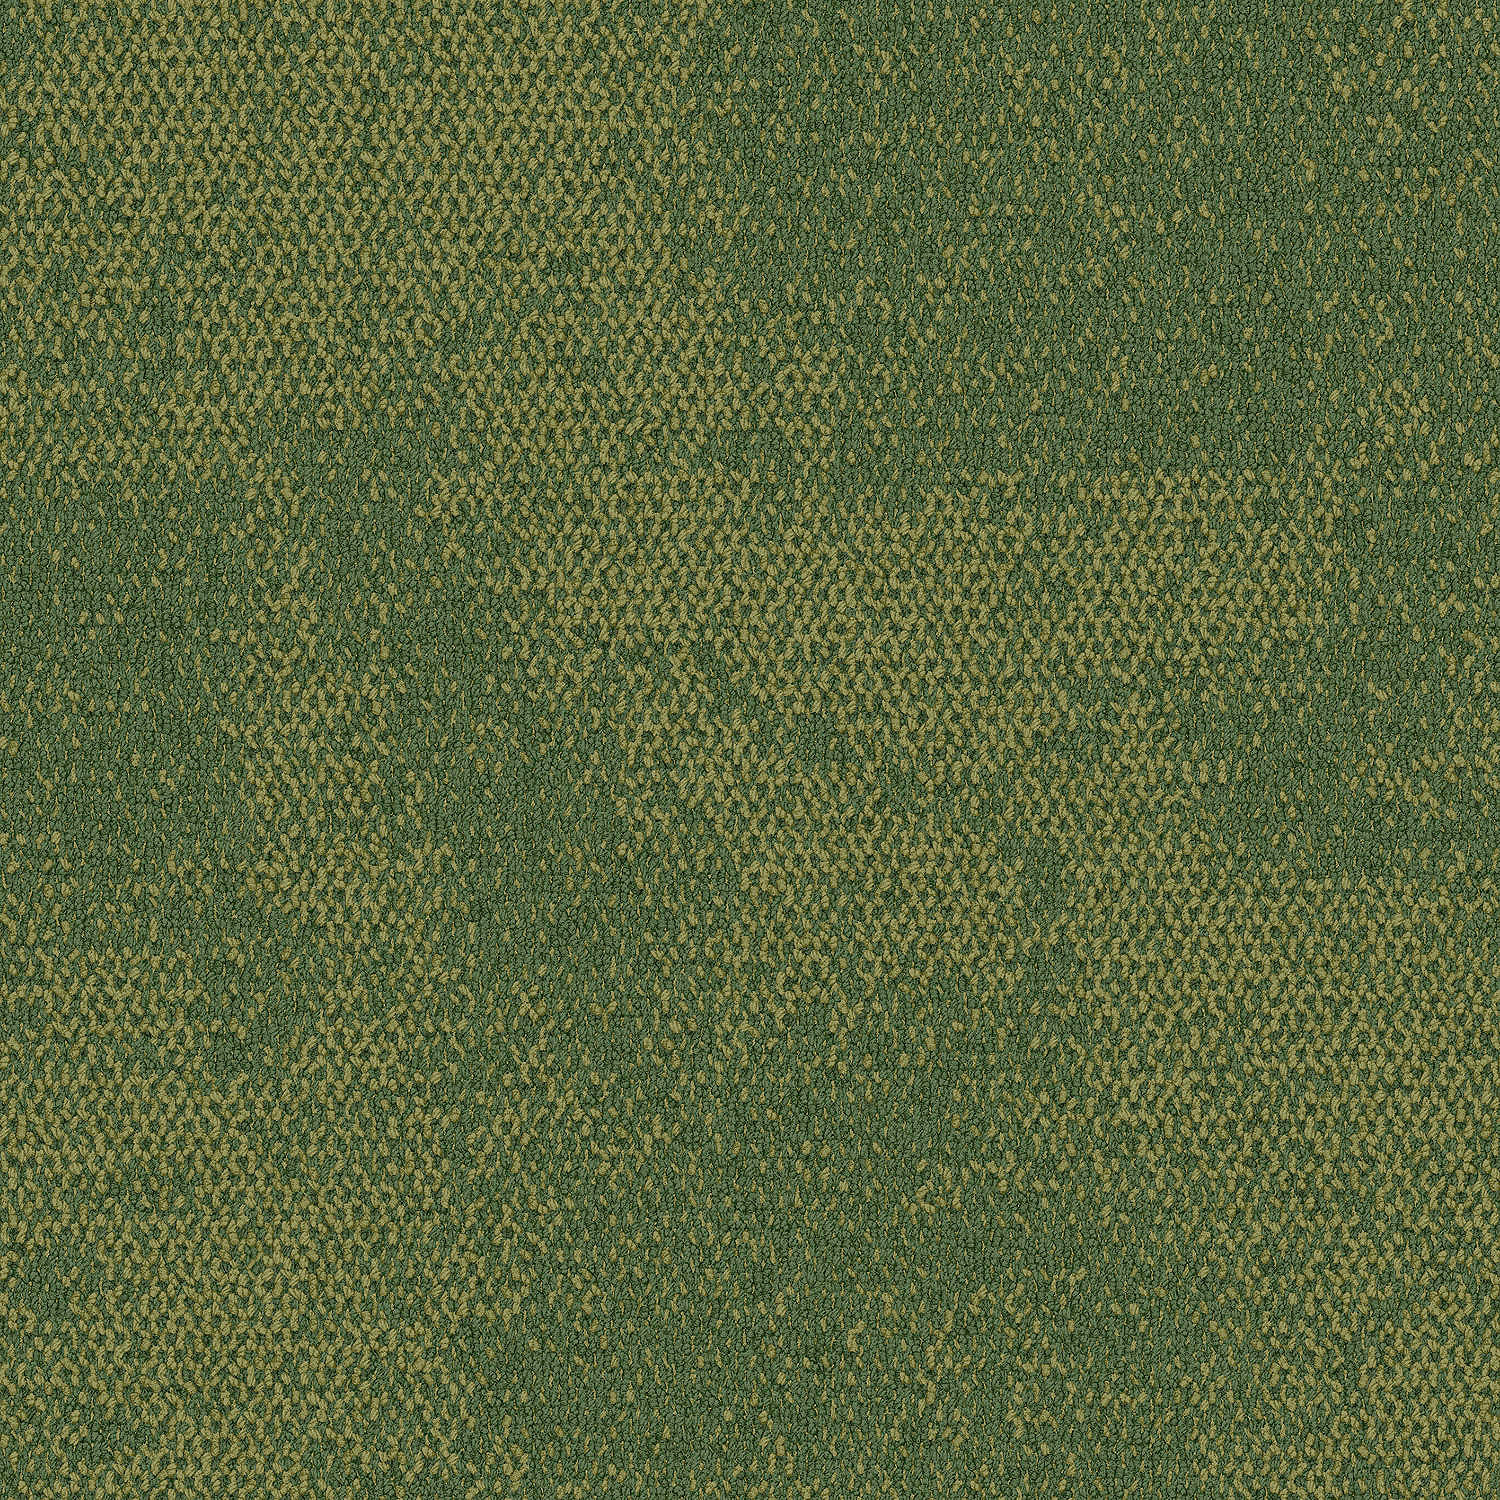 Composure Colours Carpet Tile In Olive image number 8